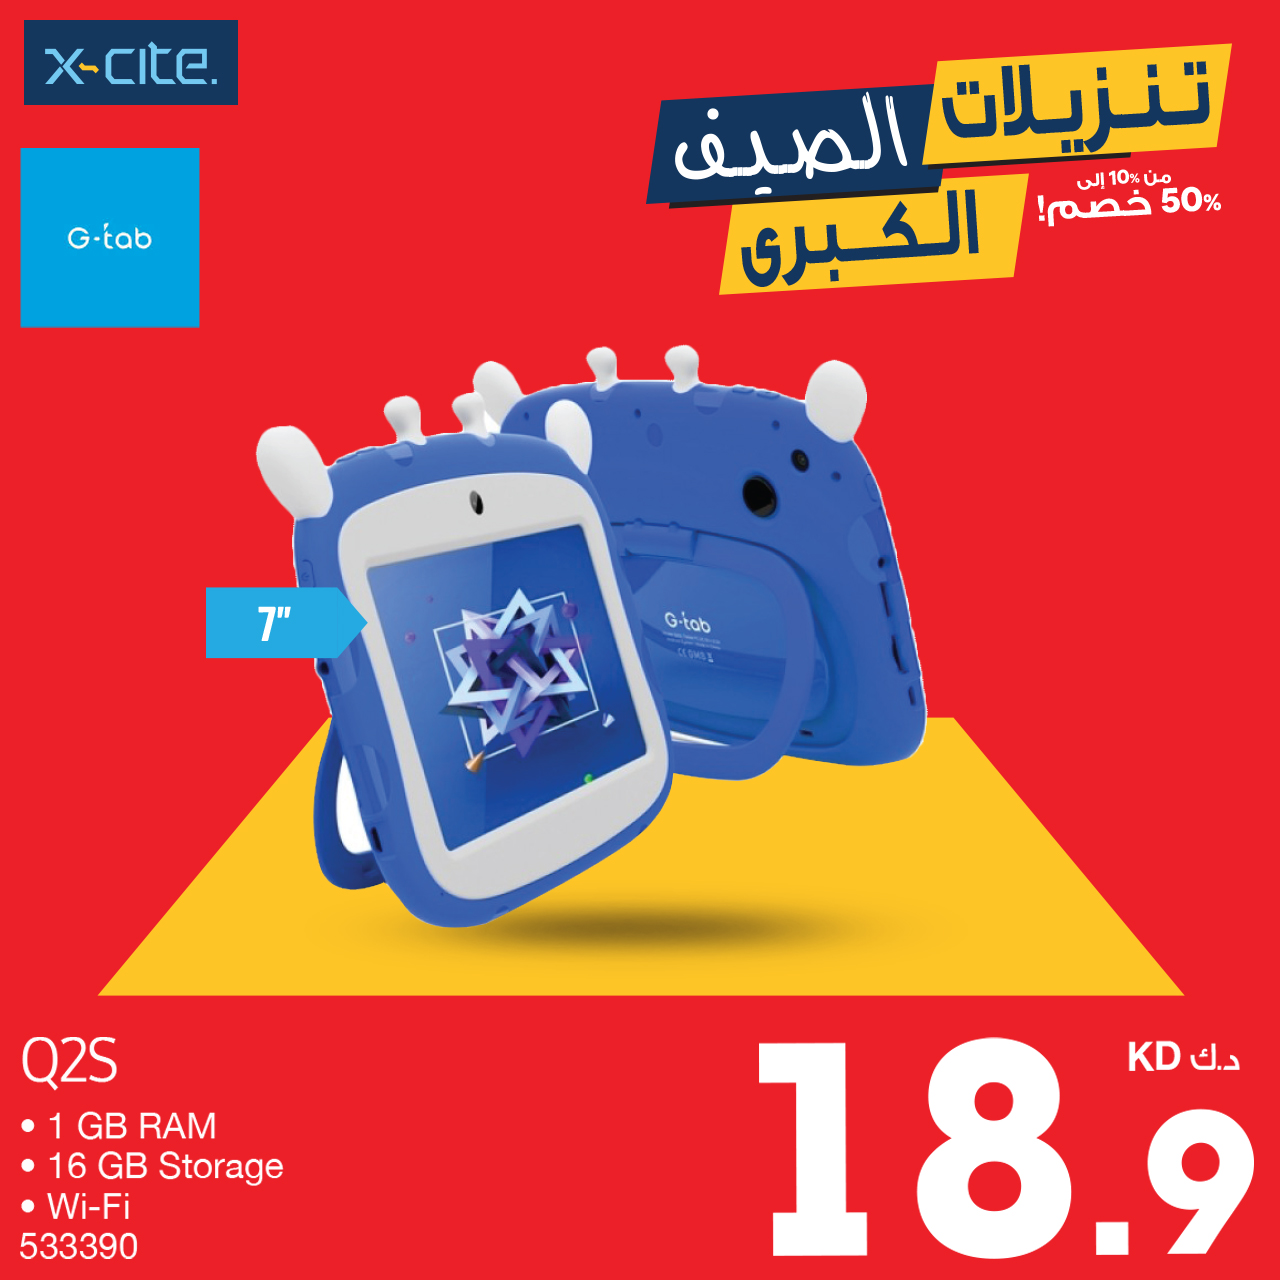 Xcite on X: "تابلت جي-تاب للأطفال كيو 2 اس، 16 جيجا، واي-فاي، 7 بوصة متوفرة  بعسر 18.9 دك! 👾 - G-Tab Q2S 16GB 7-inch Kids Wifi Tablet Available for  18.9KD! 👾 Shop